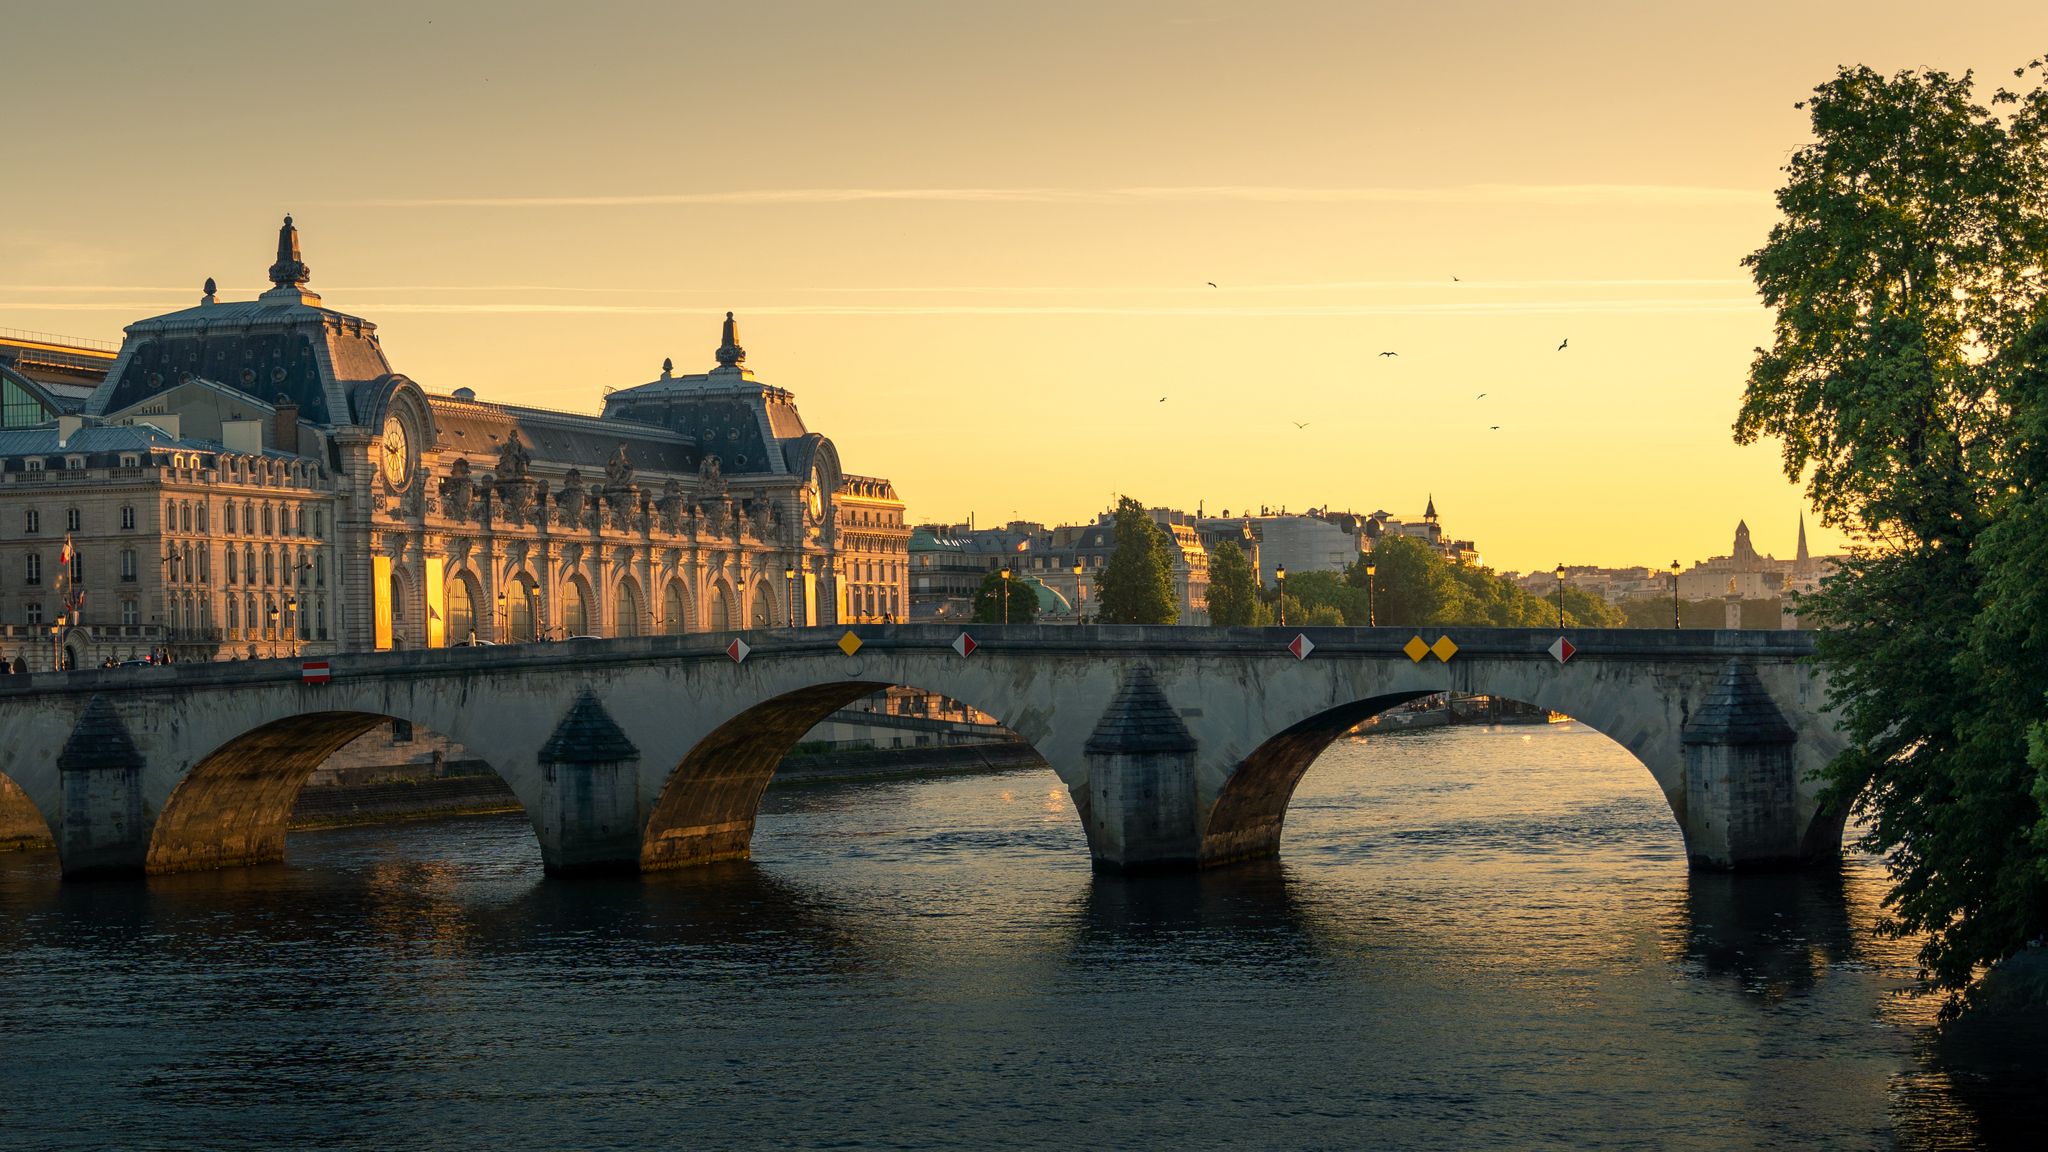 Француз рассвет. Мост Святого Михаила Париж. Обои архитектура рассвет. Река в Париже название. Птичий мост.